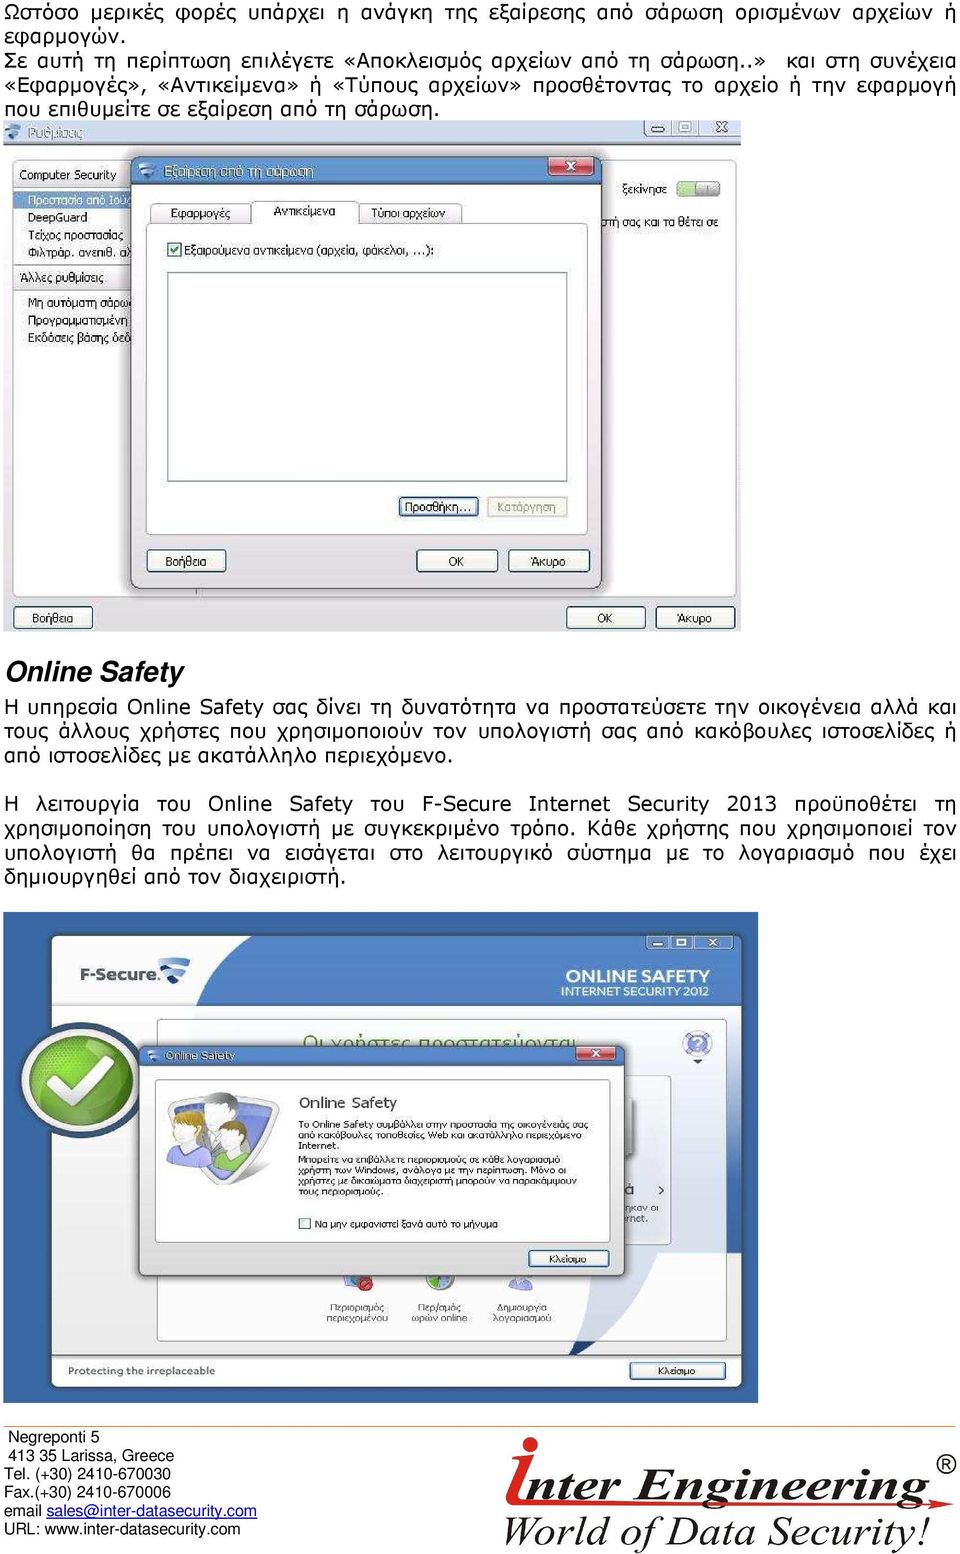 Online Safety Η υπηρεσία Online Safety σας δίνει τη δυνατότητα να προστατεύσετε την οικογένεια αλλά και τους άλλους χρήστες που χρησιµοποιούν τον υπολογιστή σας από κακόβουλες ιστοσελίδες ή από